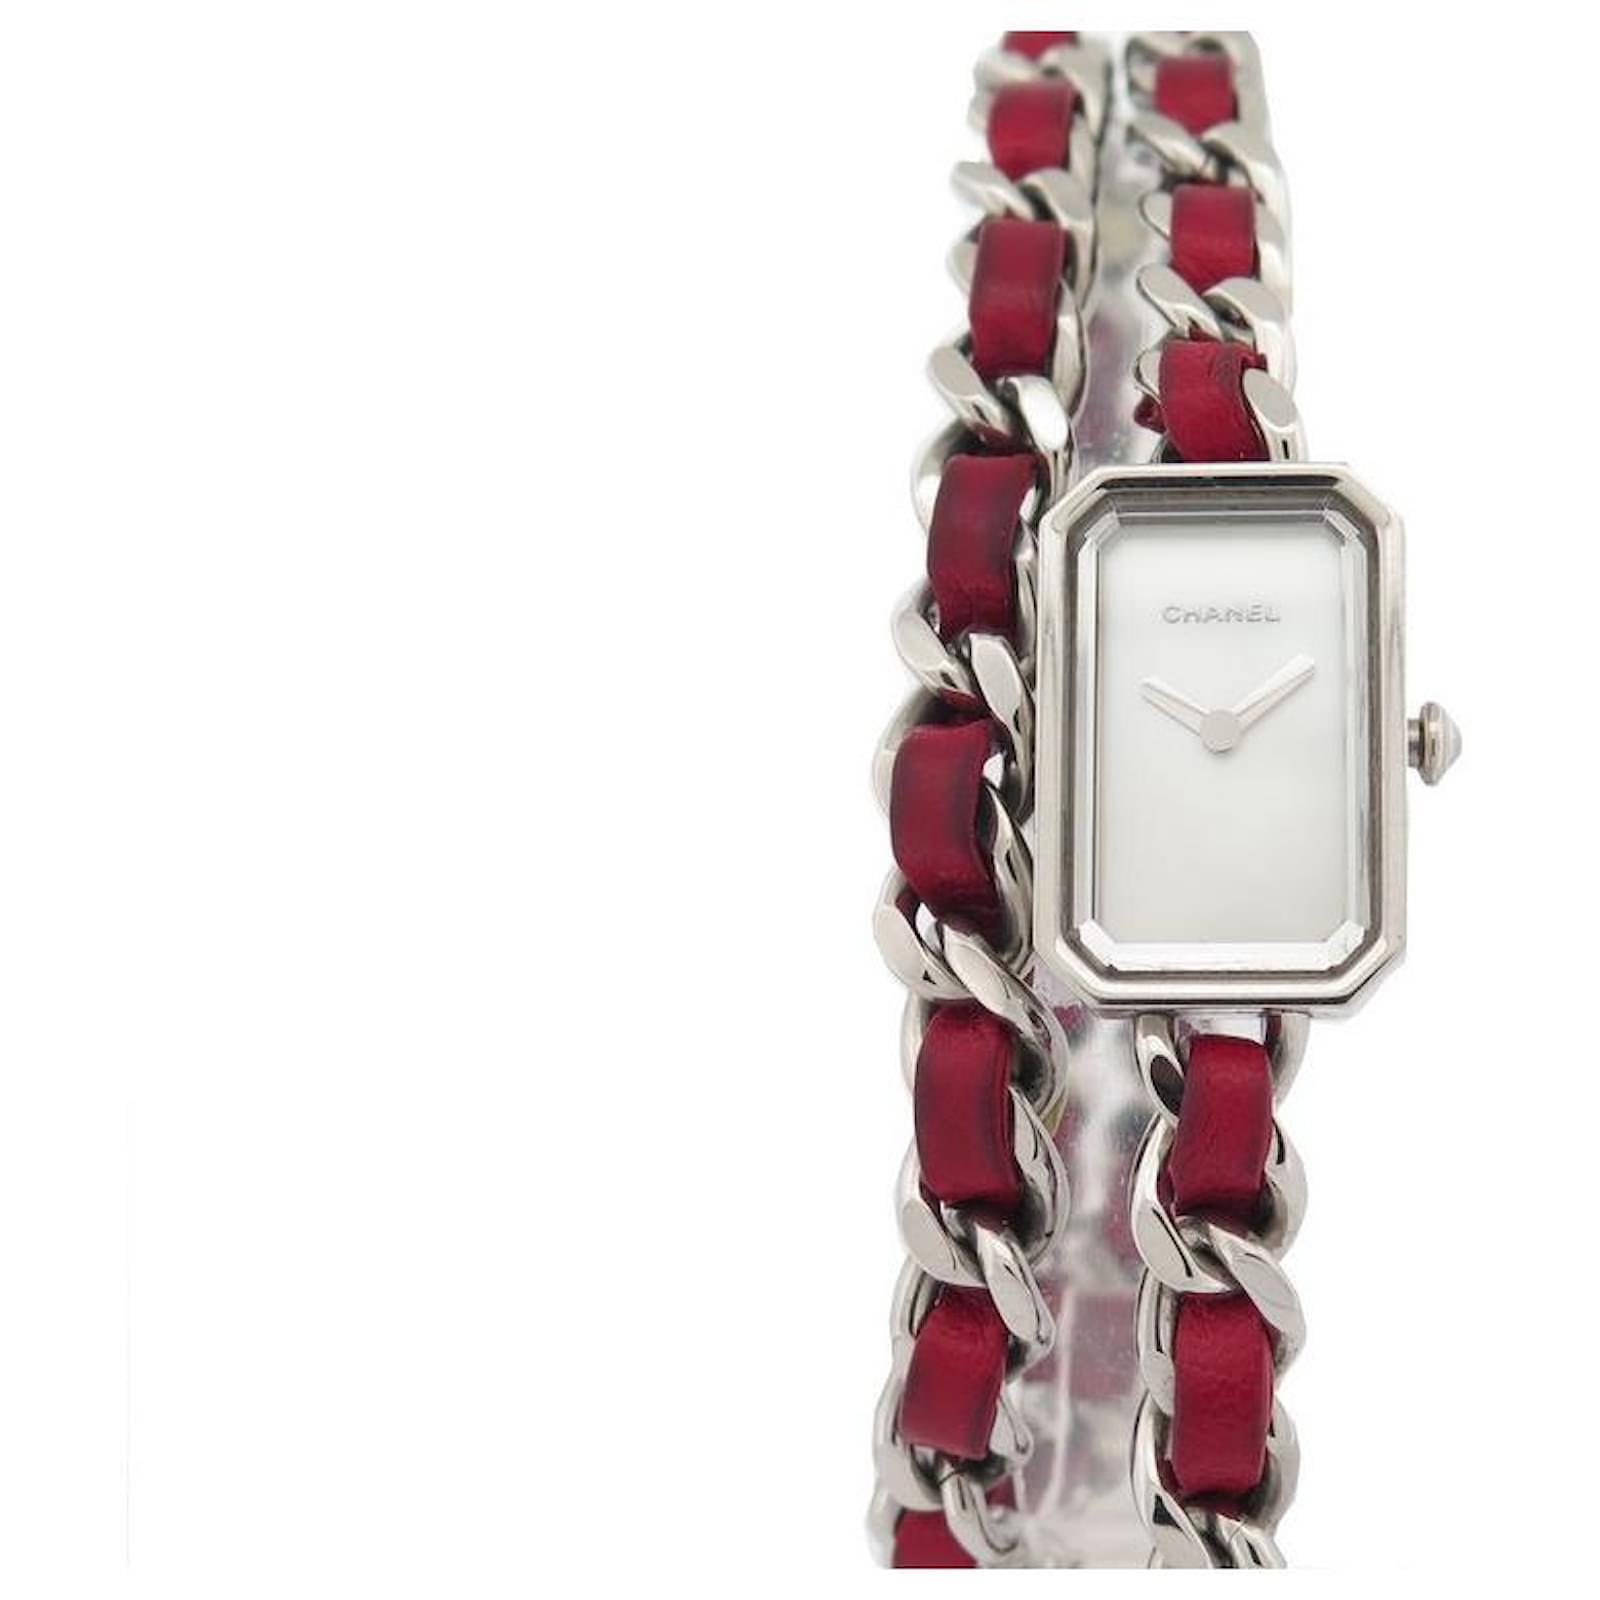 Fine Watches Chanel Chanel Premiere Rock Ed Watch. Limited Triple Tower Steel Quartz Watch